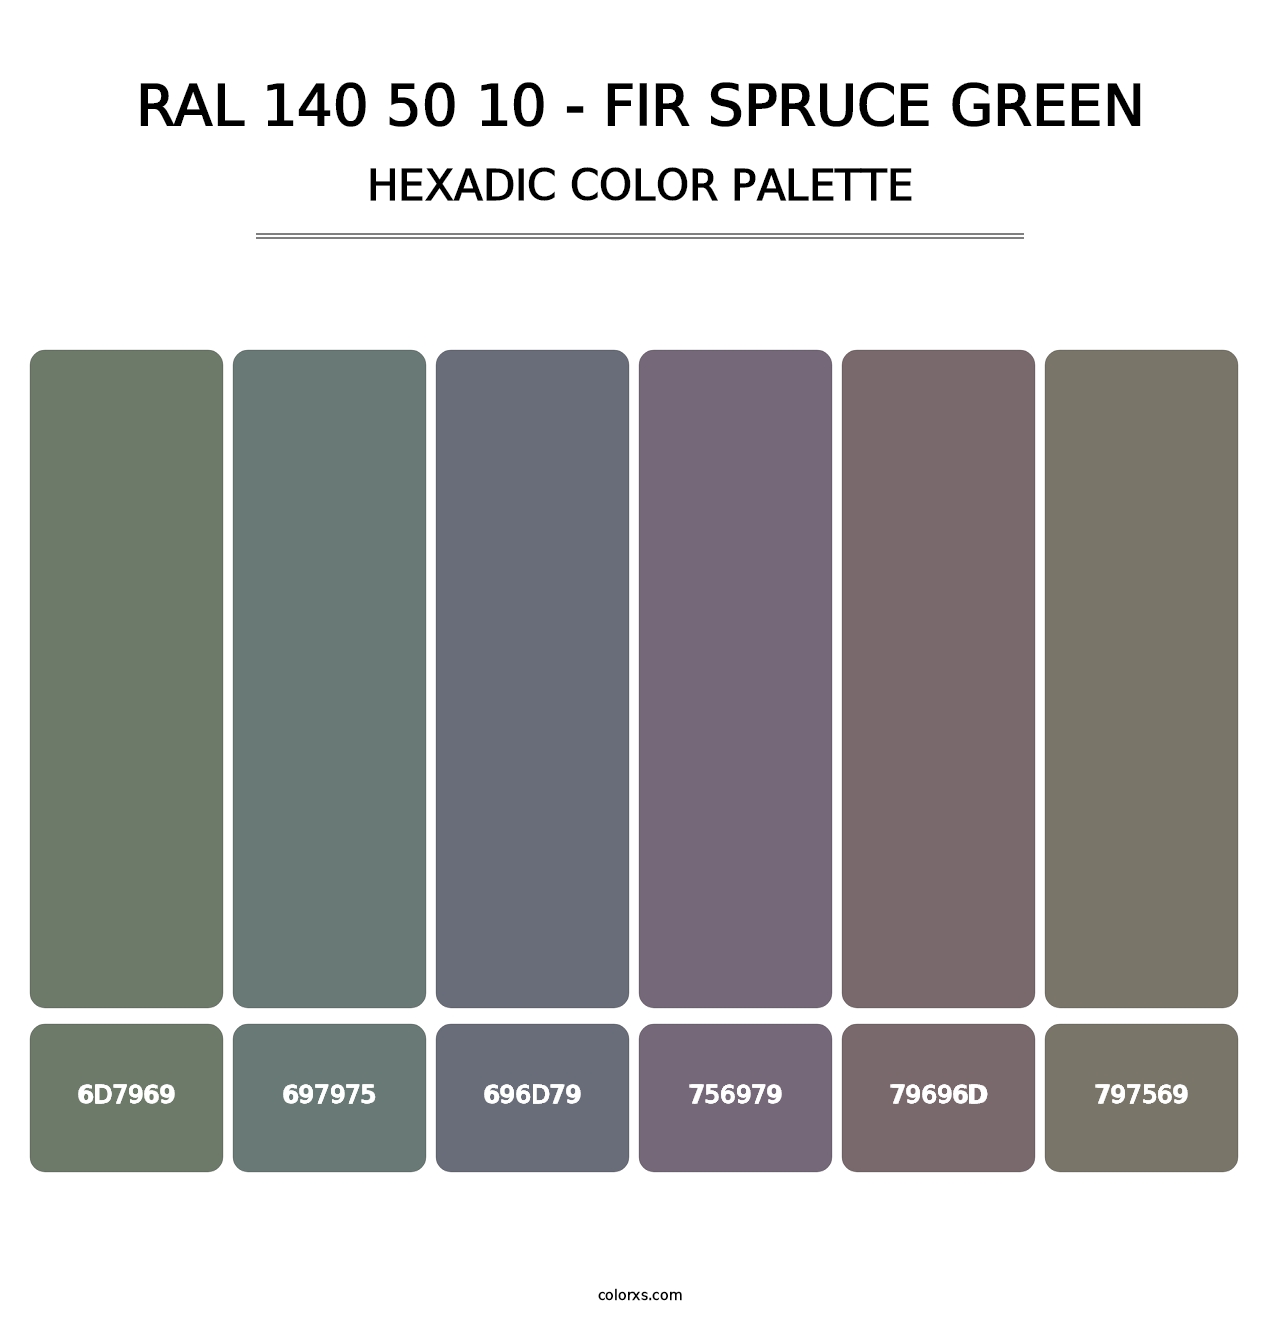 RAL 140 50 10 - Fir Spruce Green - Hexadic Color Palette